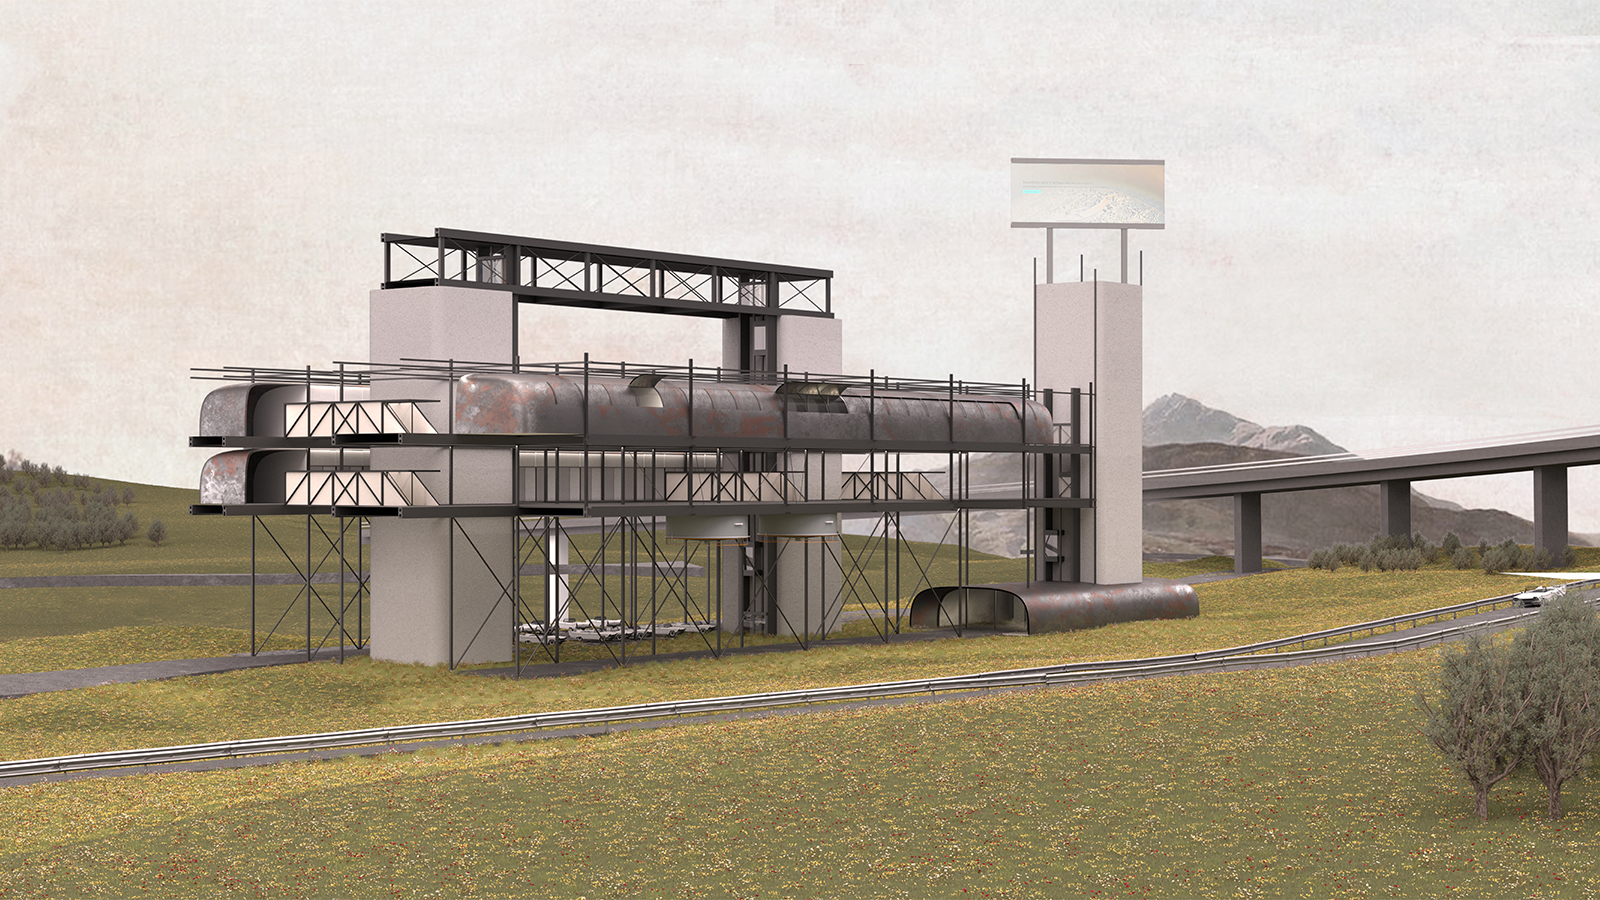 Archisearch Mobil Park: Επαναχρησιμοποίηση Πετρελαιοπηγών για τον Σχεδιασμό Ξενοδοχειακού Πάρκου | Διπλωματική Εργασία από τον Μιχάλη Μπίνιο